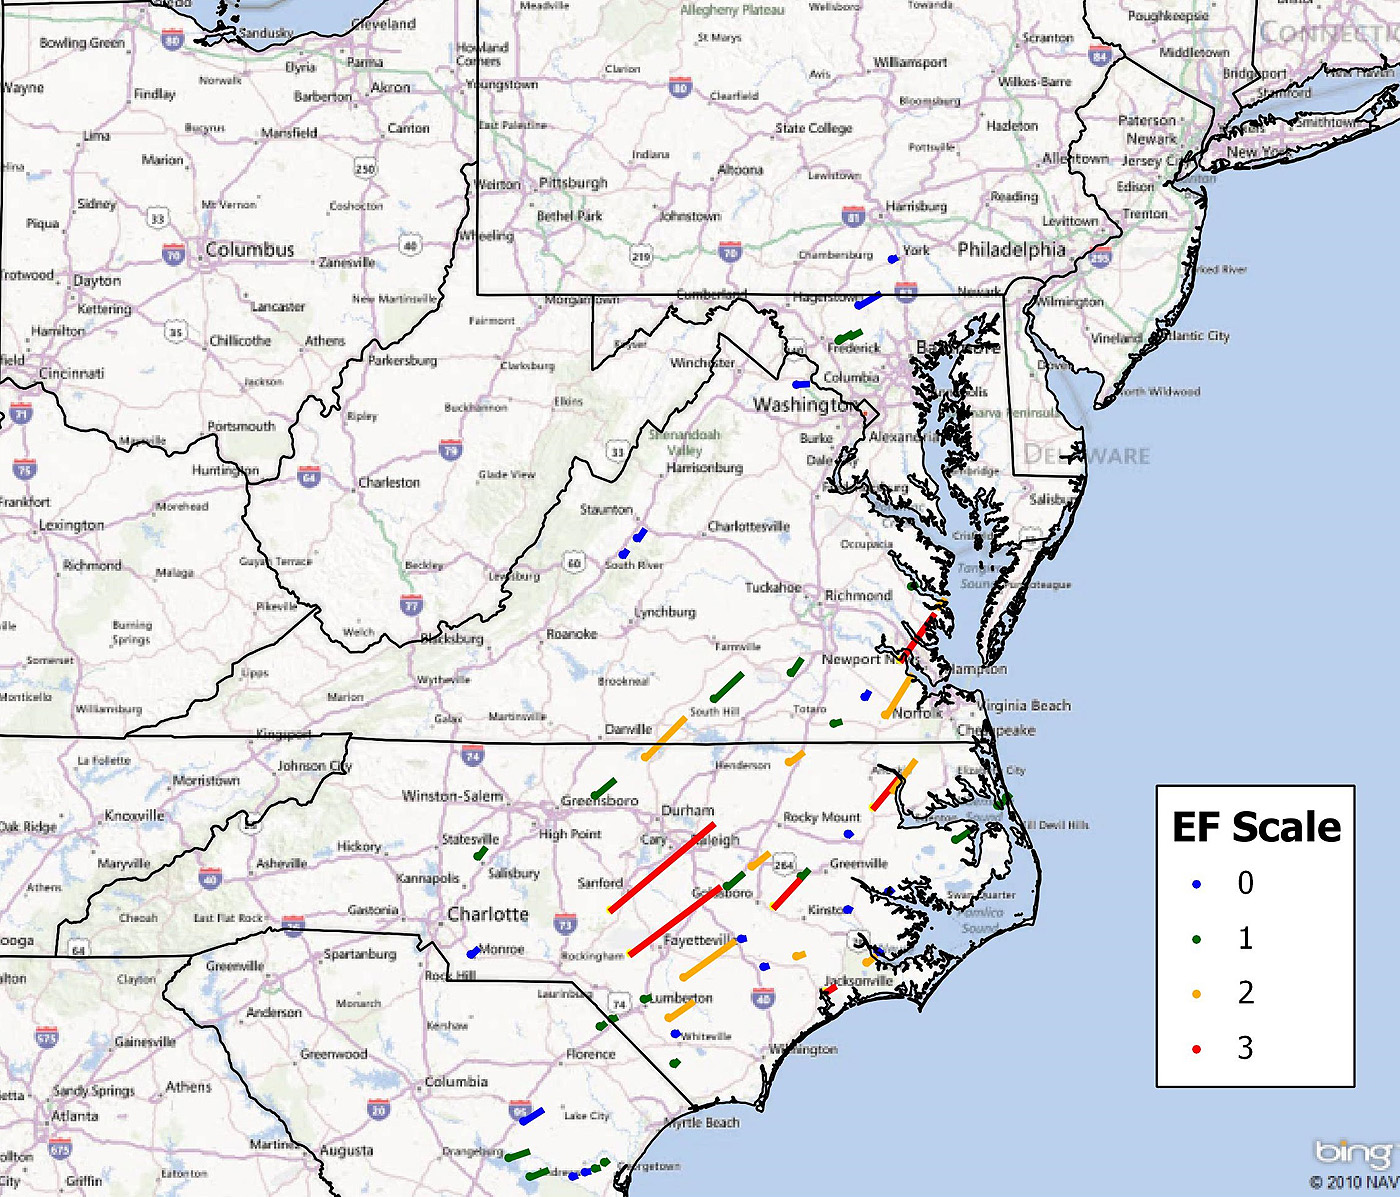 North Carolina's largest tornado outbreak - April 16, 2011 - U.S. Tornadoes